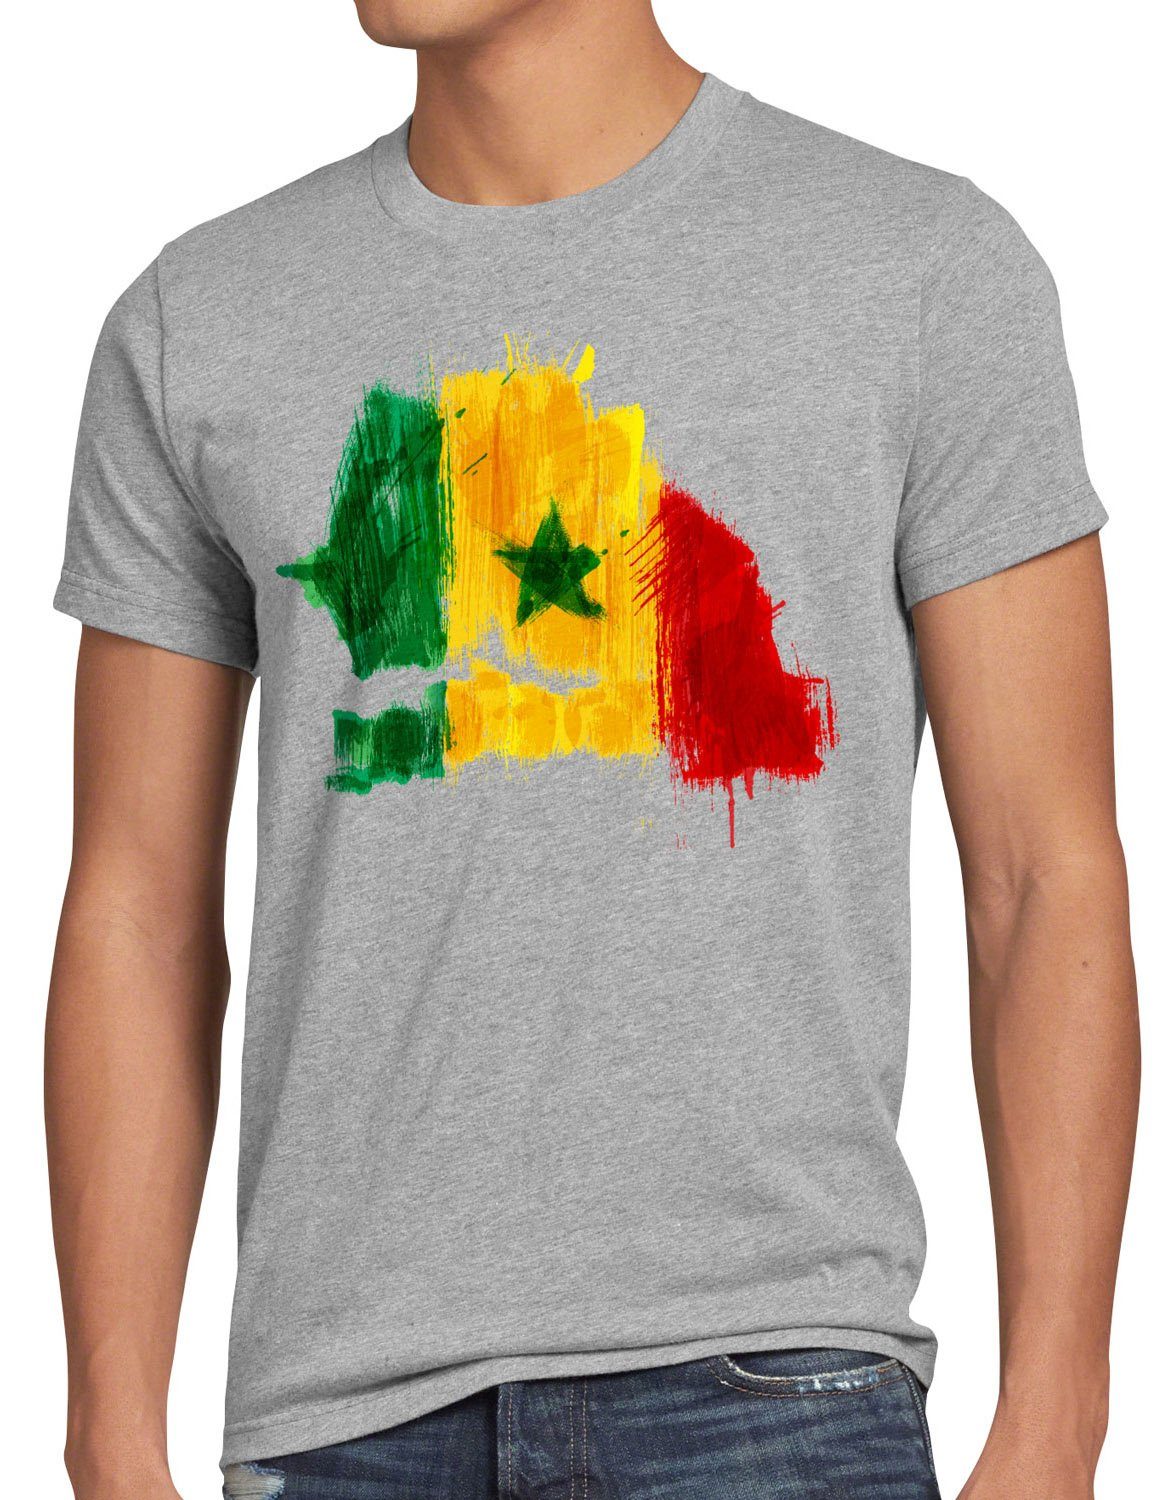 Fahne Print-Shirt style3 Herren meliert WM EM Senegal Afrika grau Sport Flagge T-Shirt Fußball